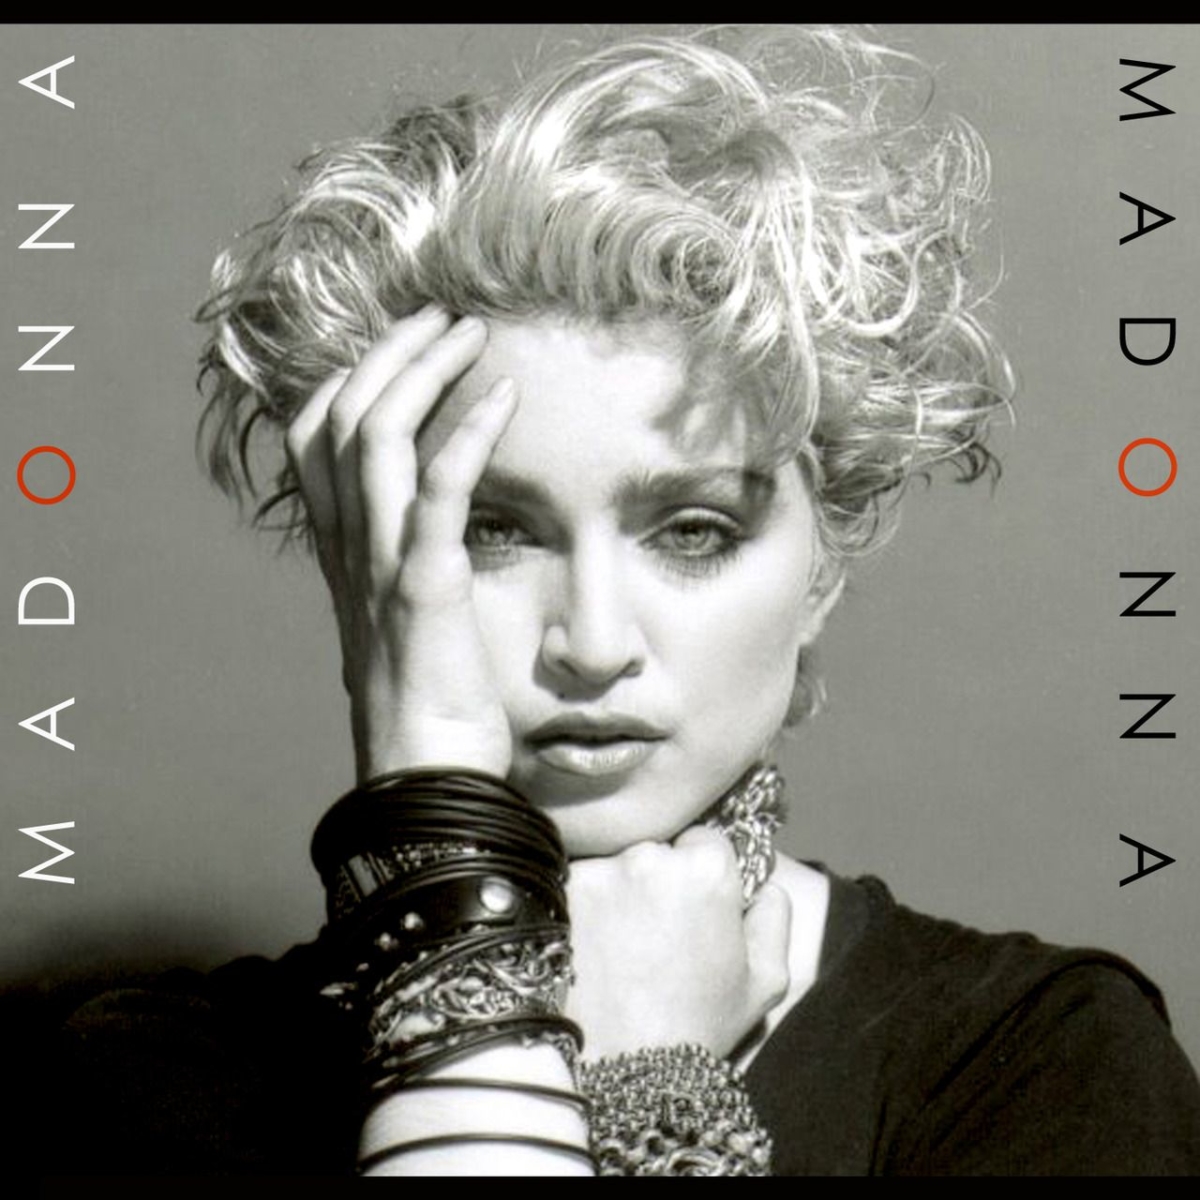 Madonna by Madonna